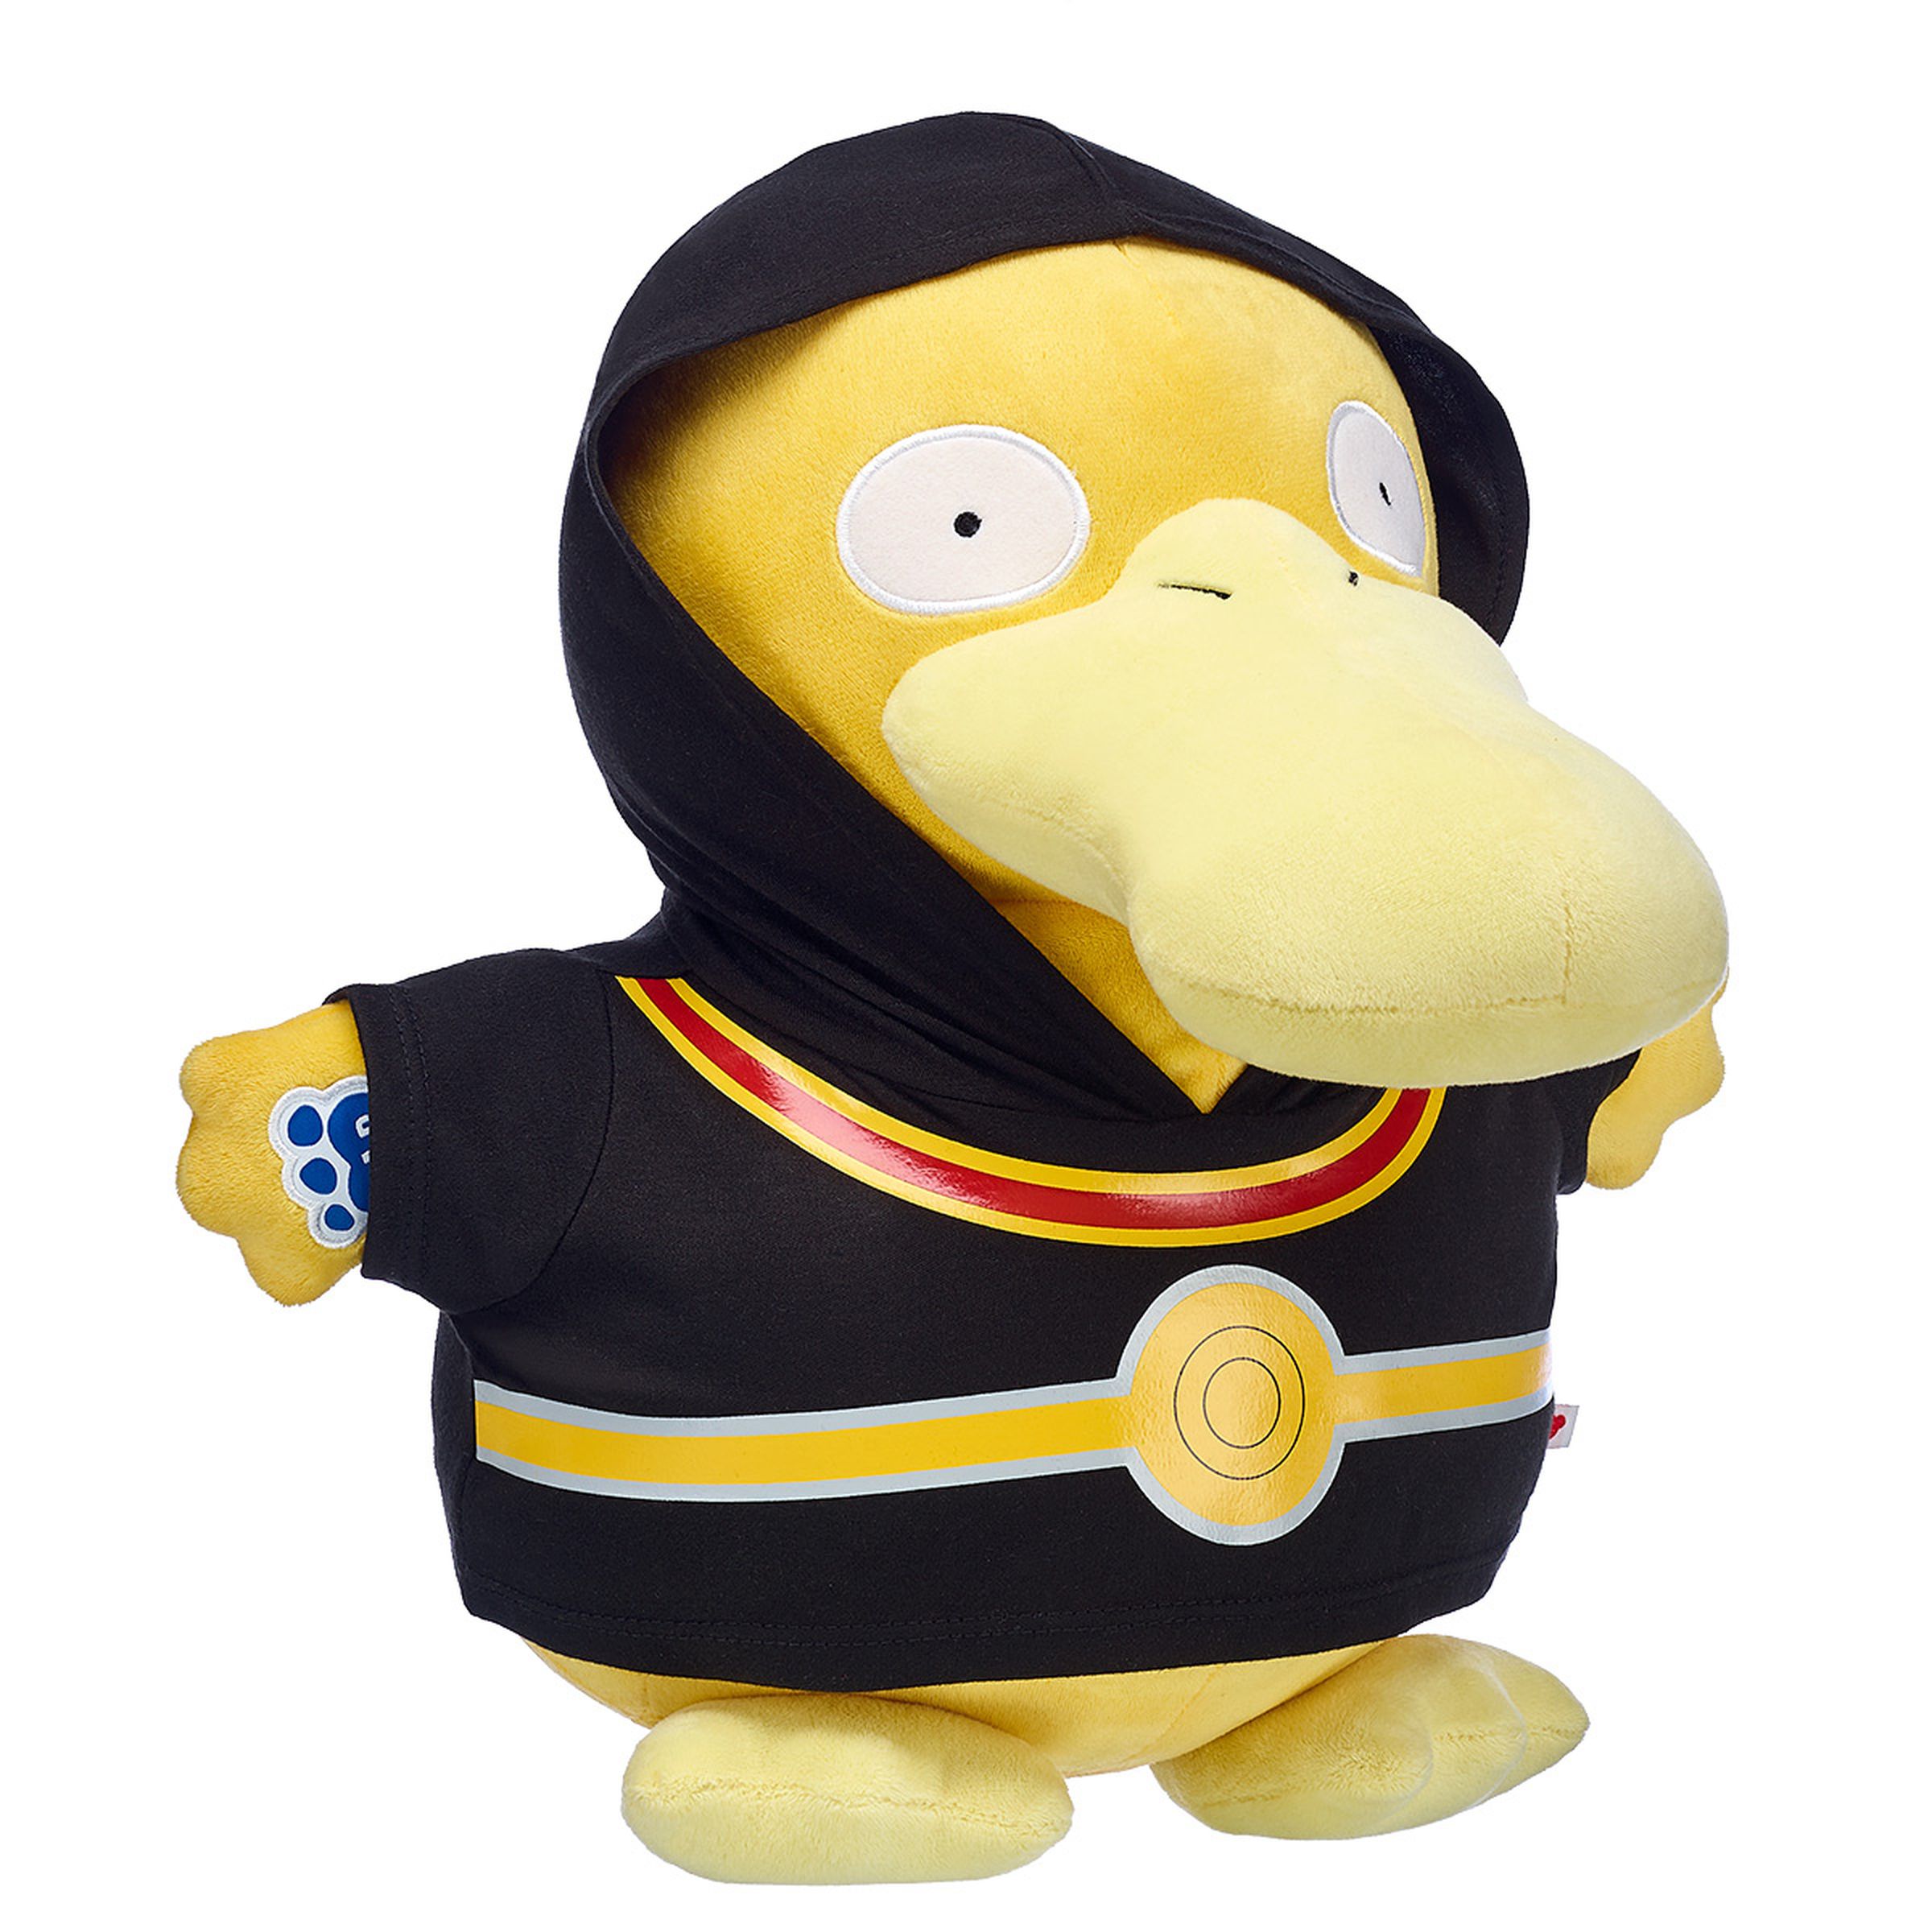 Psyduck in a Pokémon hoodie.